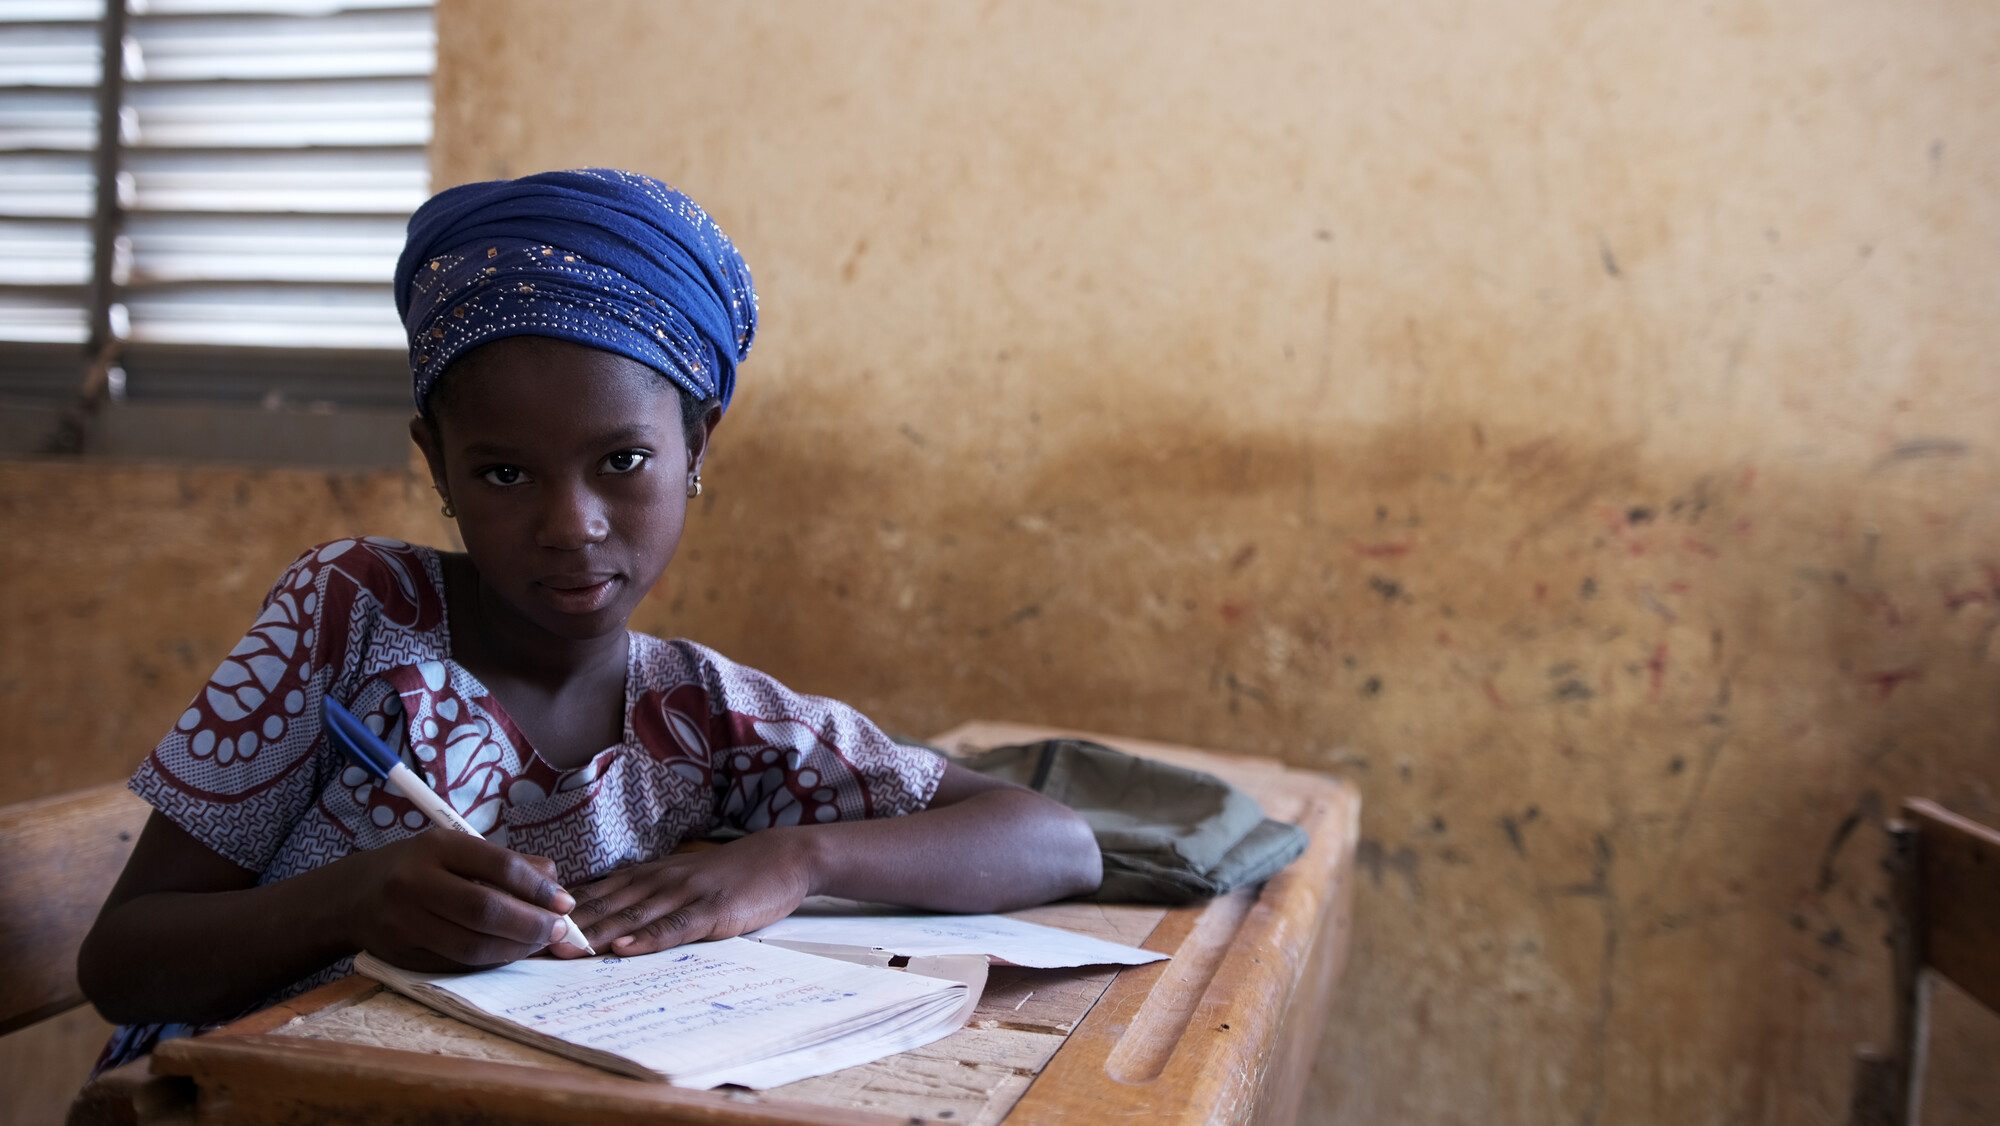 Salimata at school in Mali